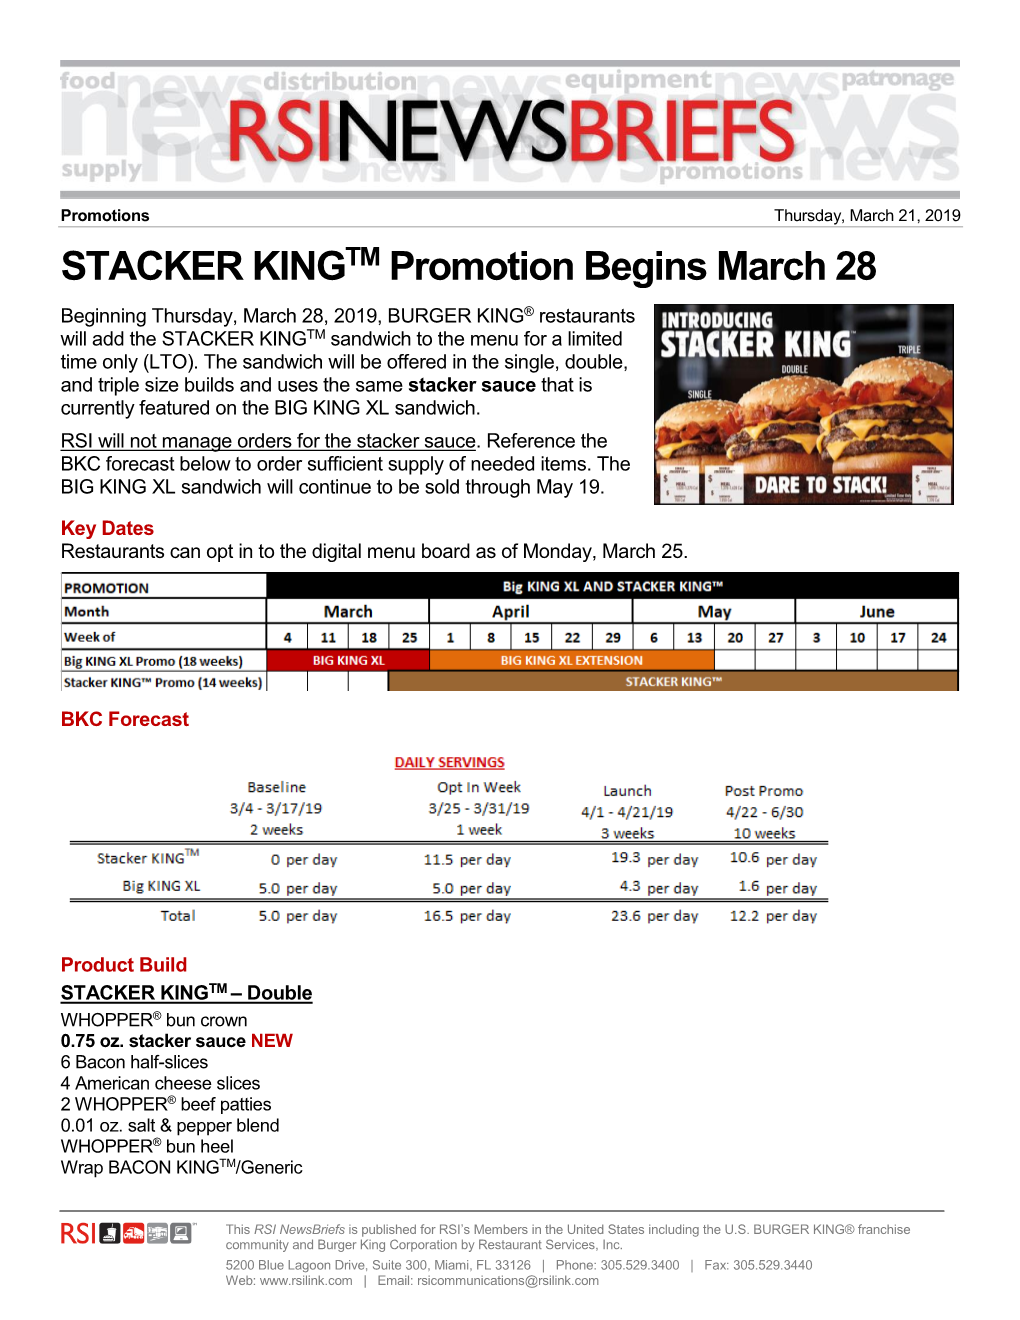 STACKER KINGTM Promotion Begins March 28